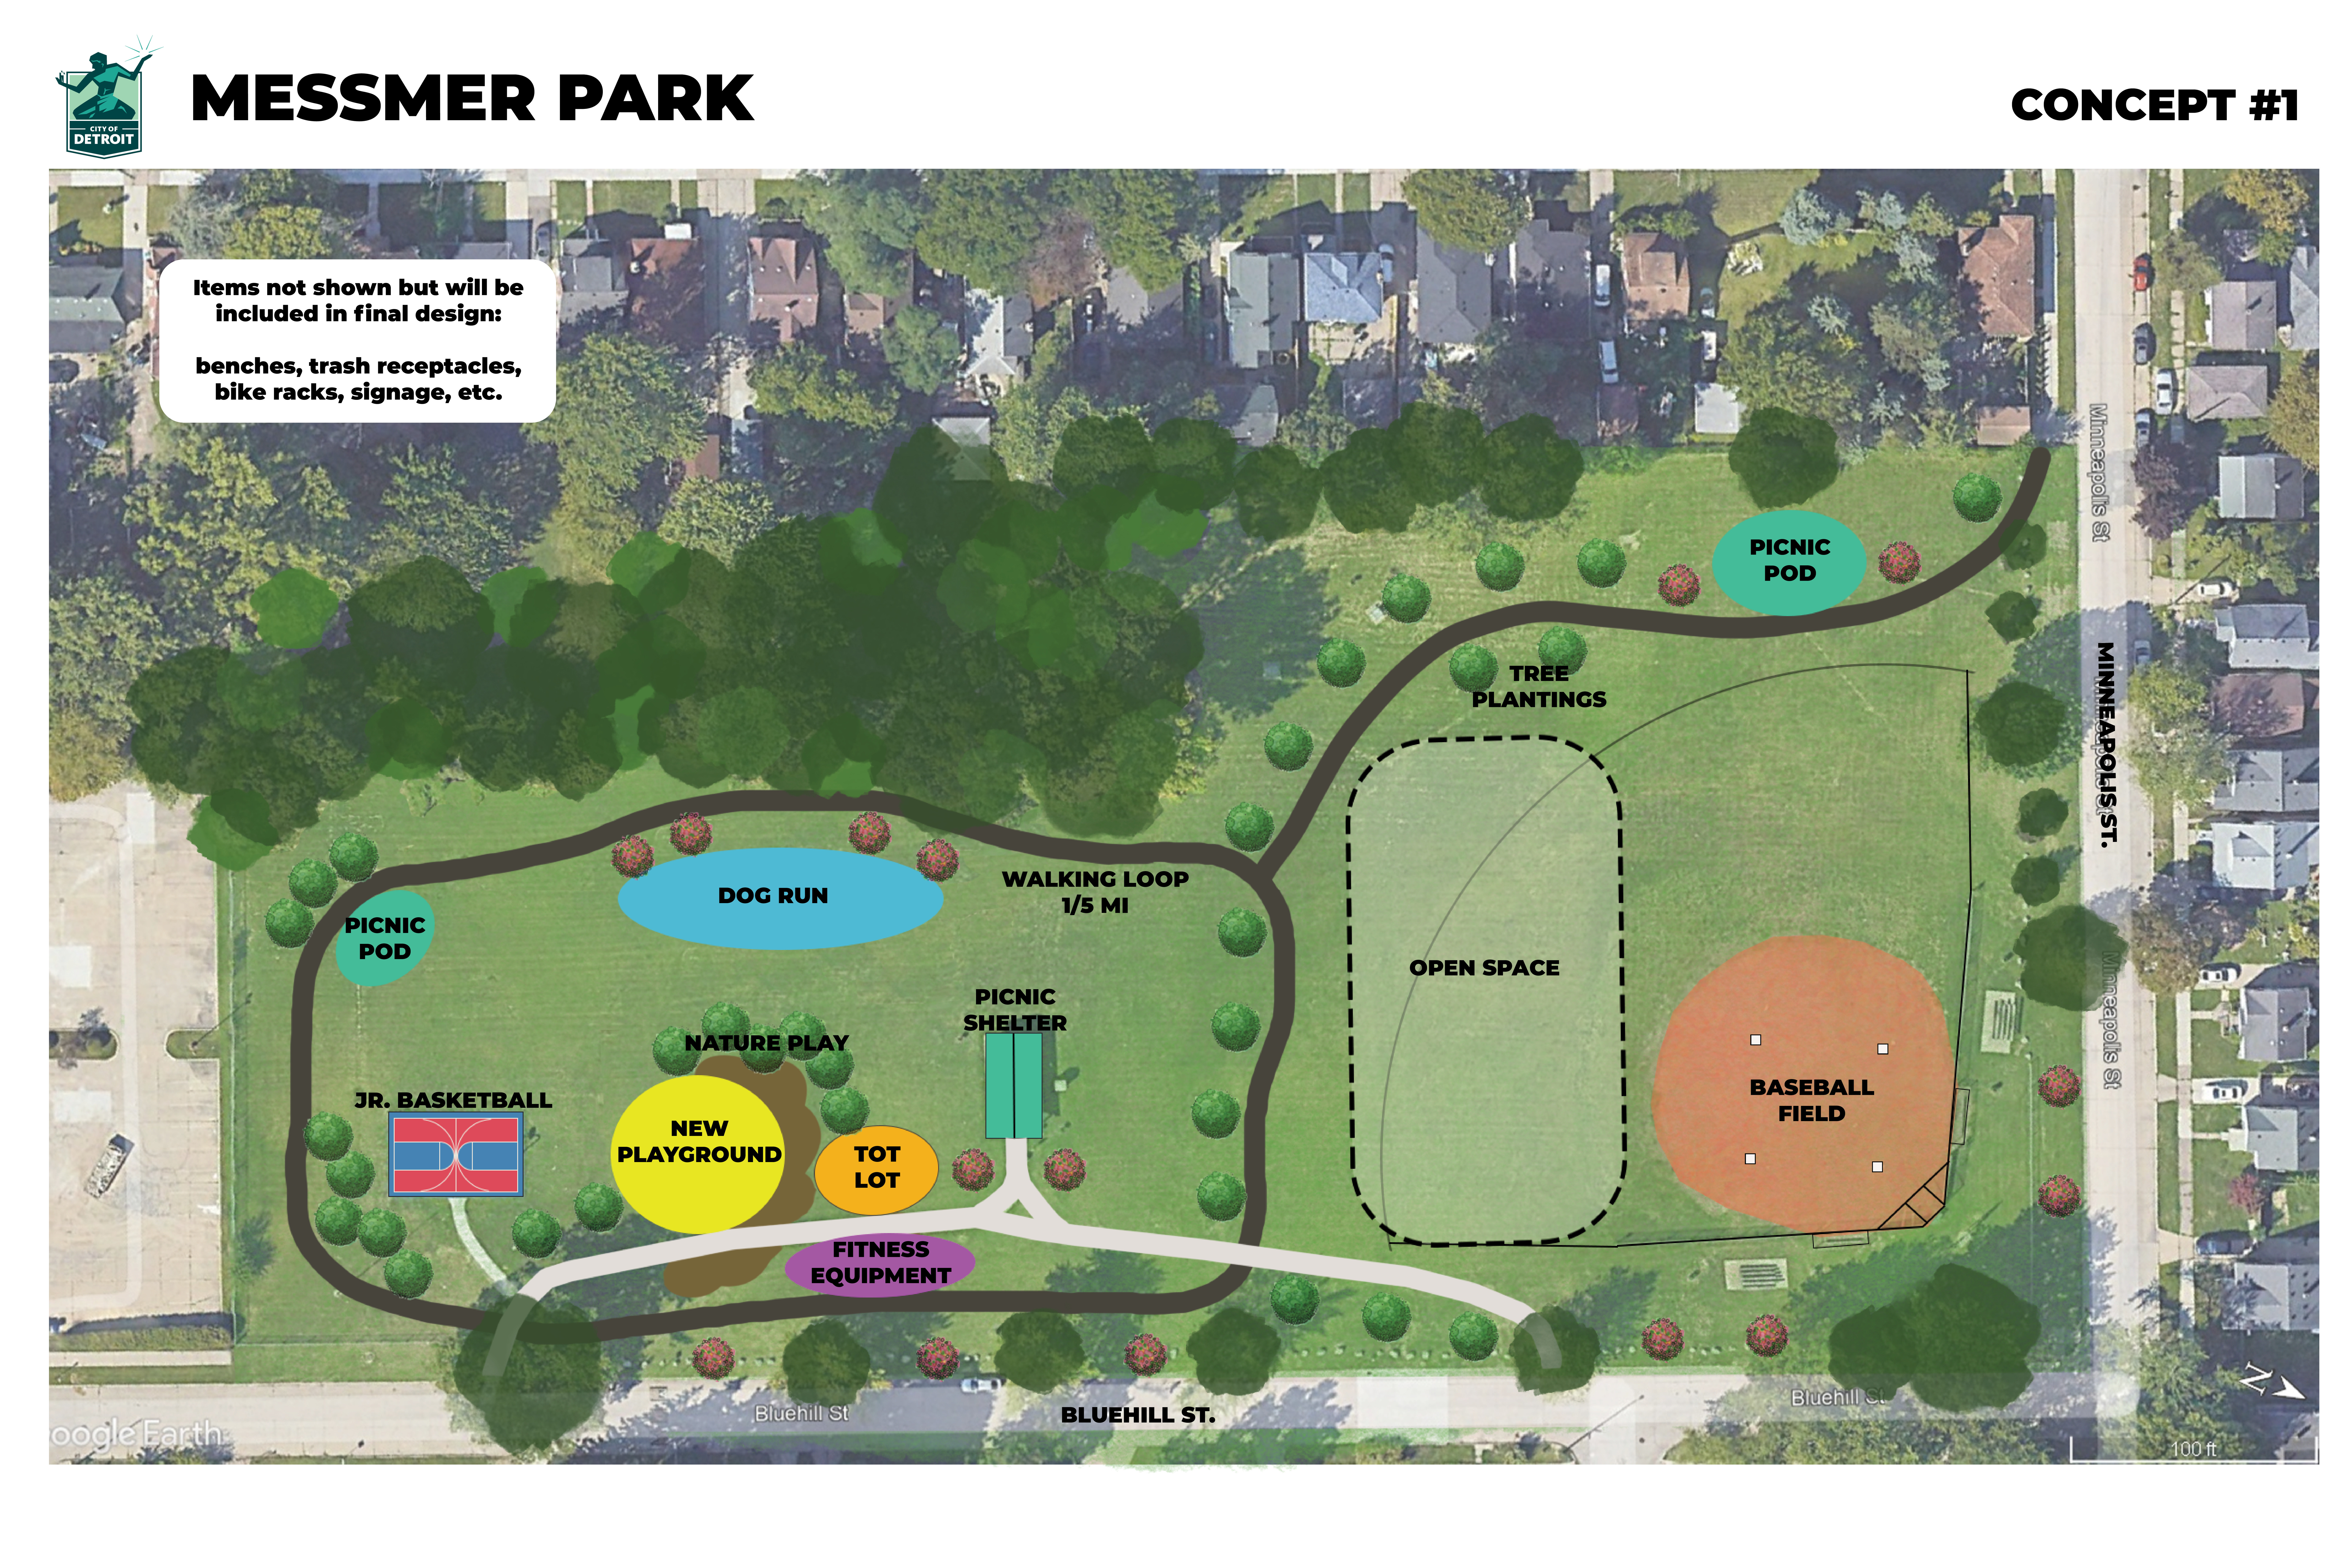 1st concept plan for Messmer Park